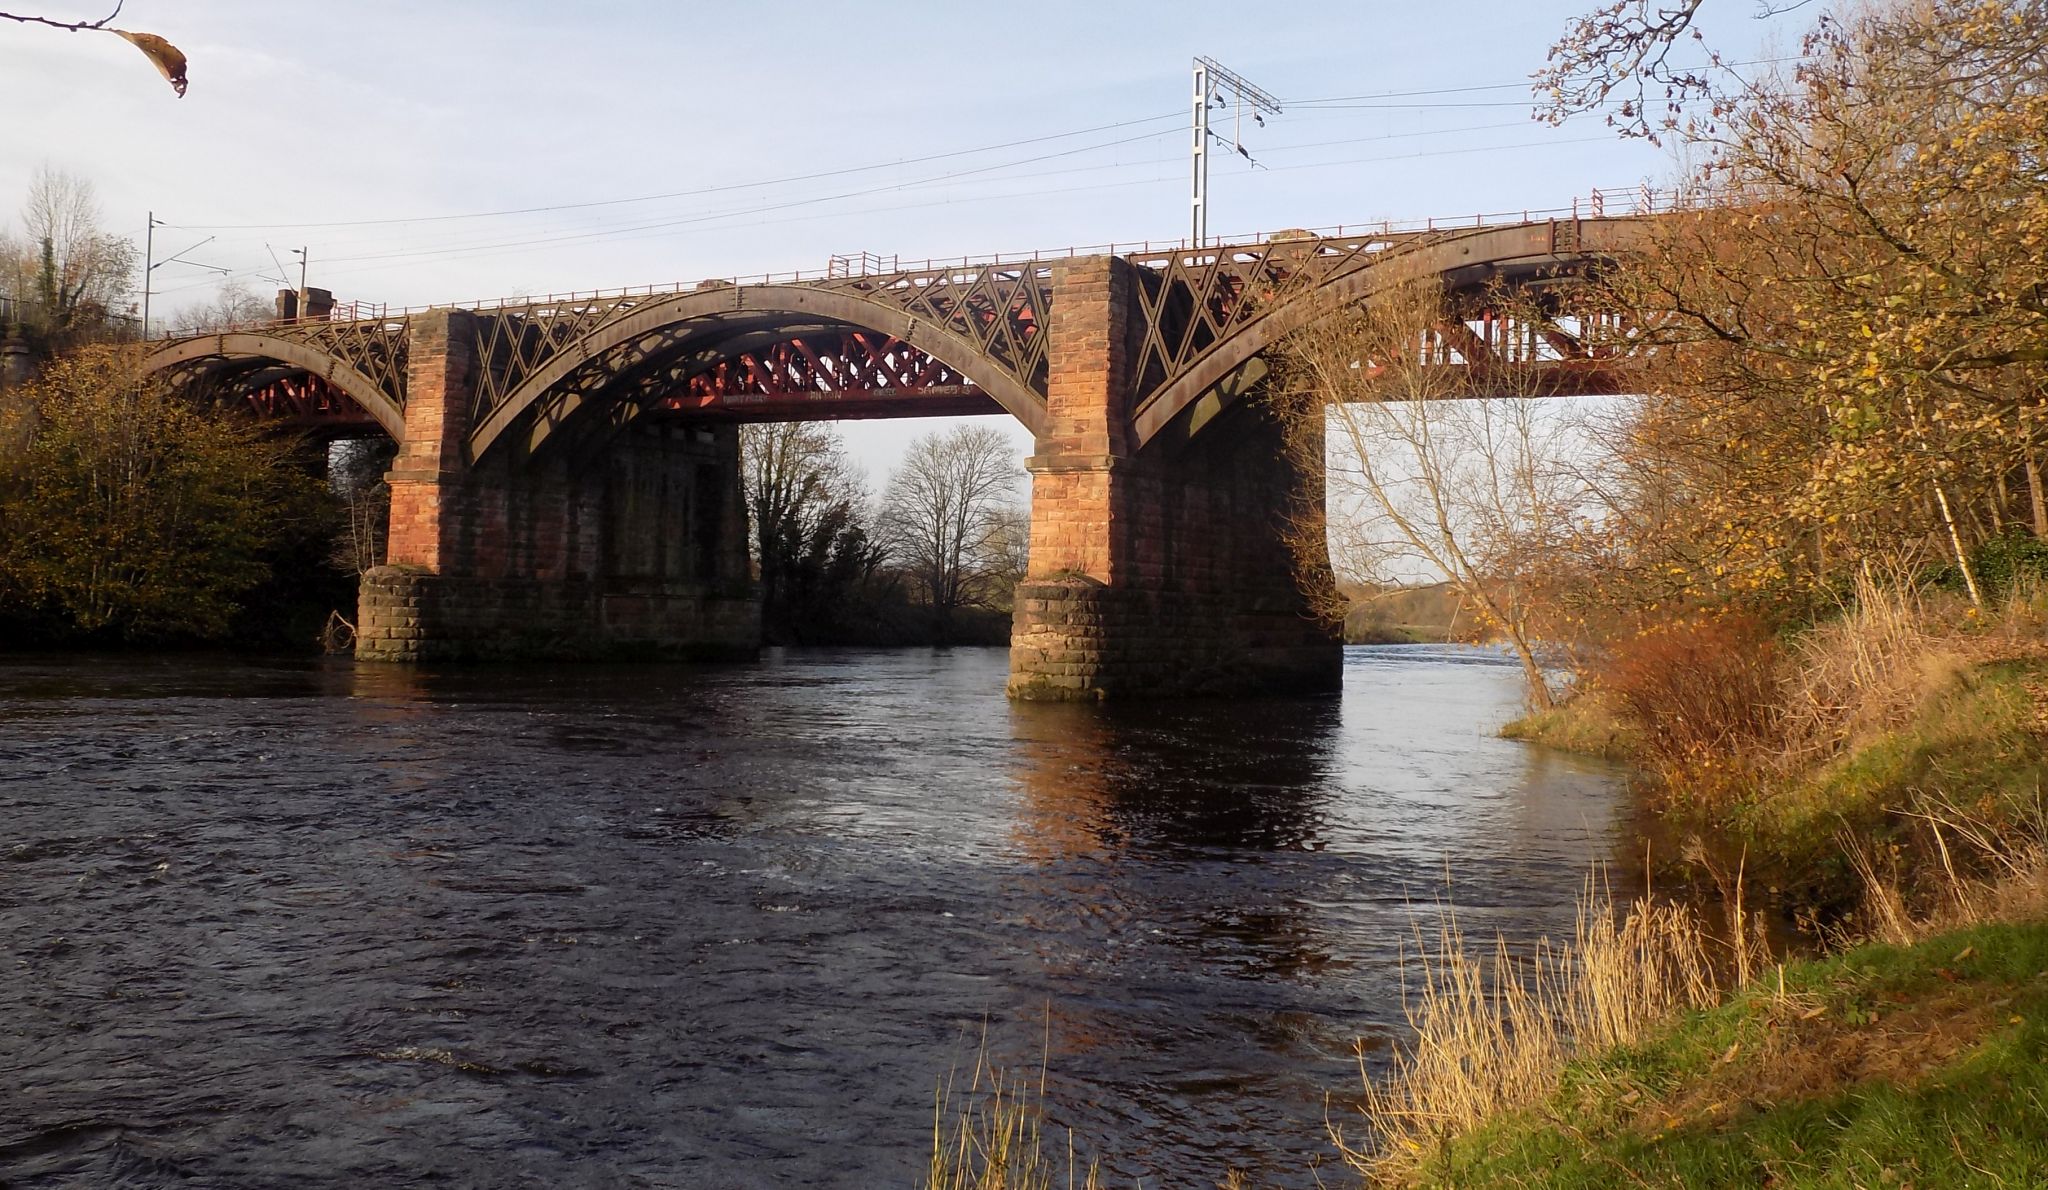 Railway Bridge over the River Clyde near Uddingston